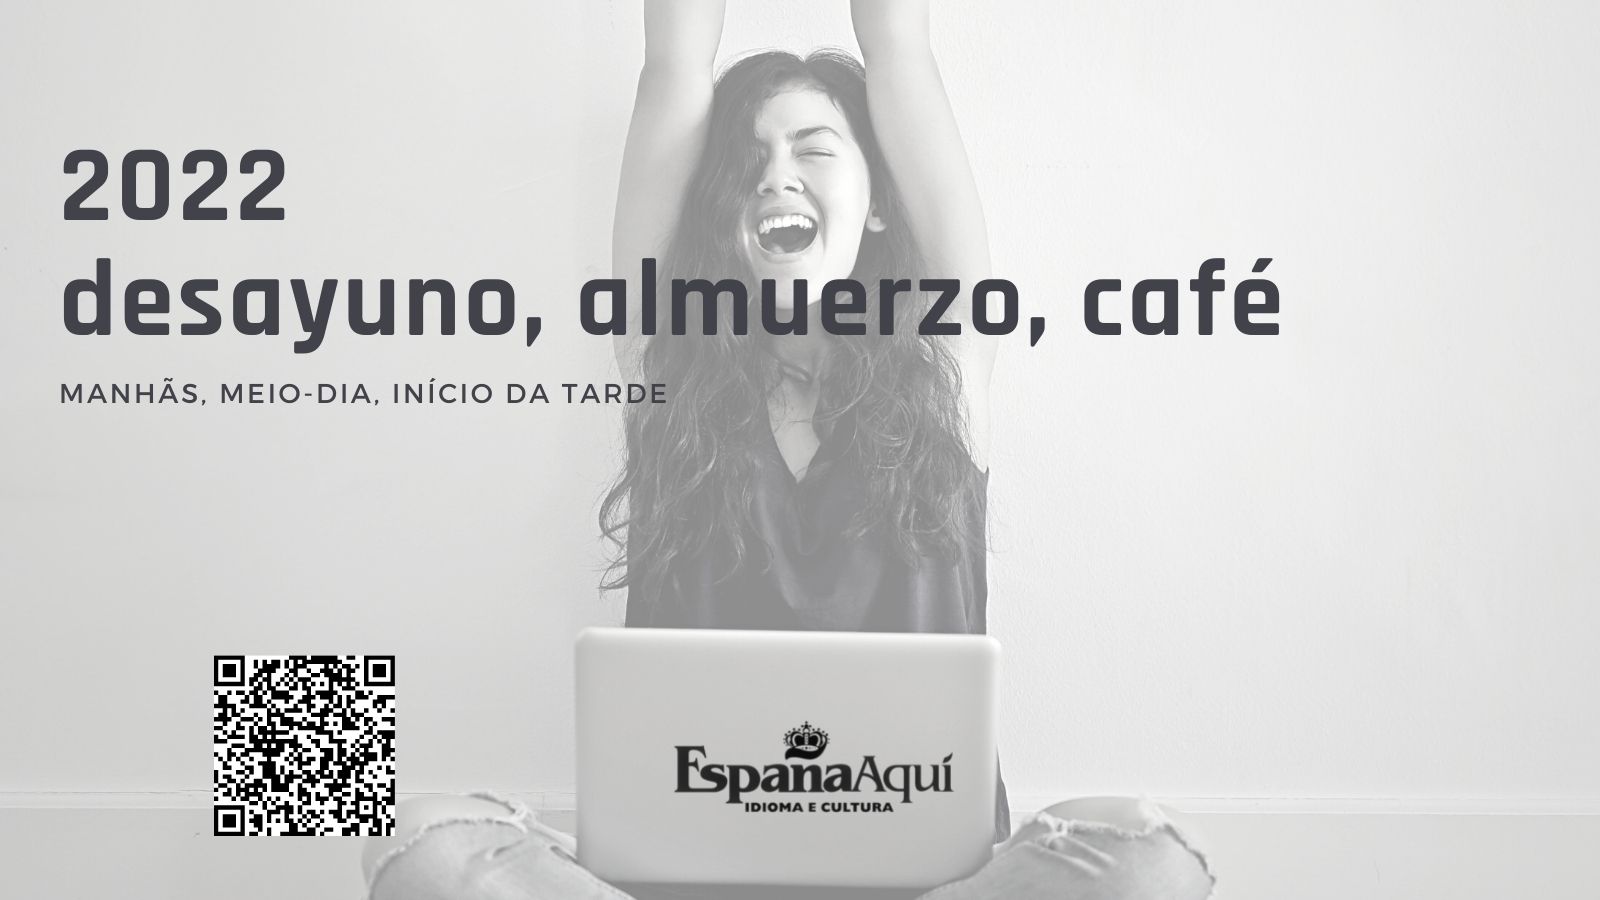 https://www.espanaaqui.com.br/pdf/dezembro%202021/desayunos,%20almuerzo,%20tarde.jpg